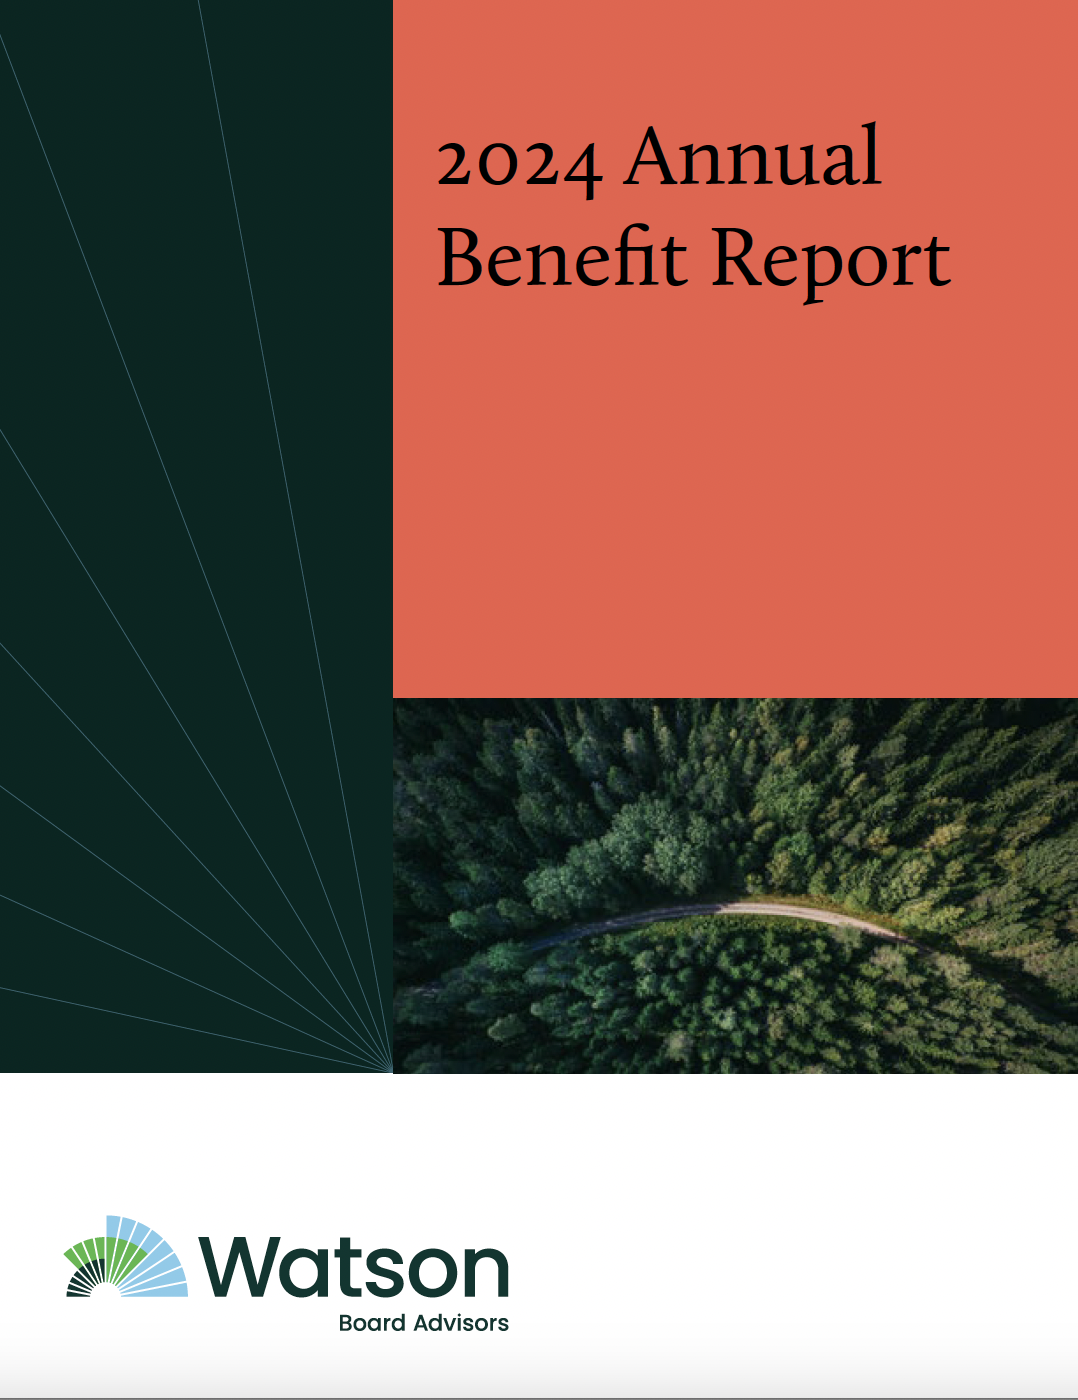 2024 Annual Benefit Report. Watson Board Advisors.